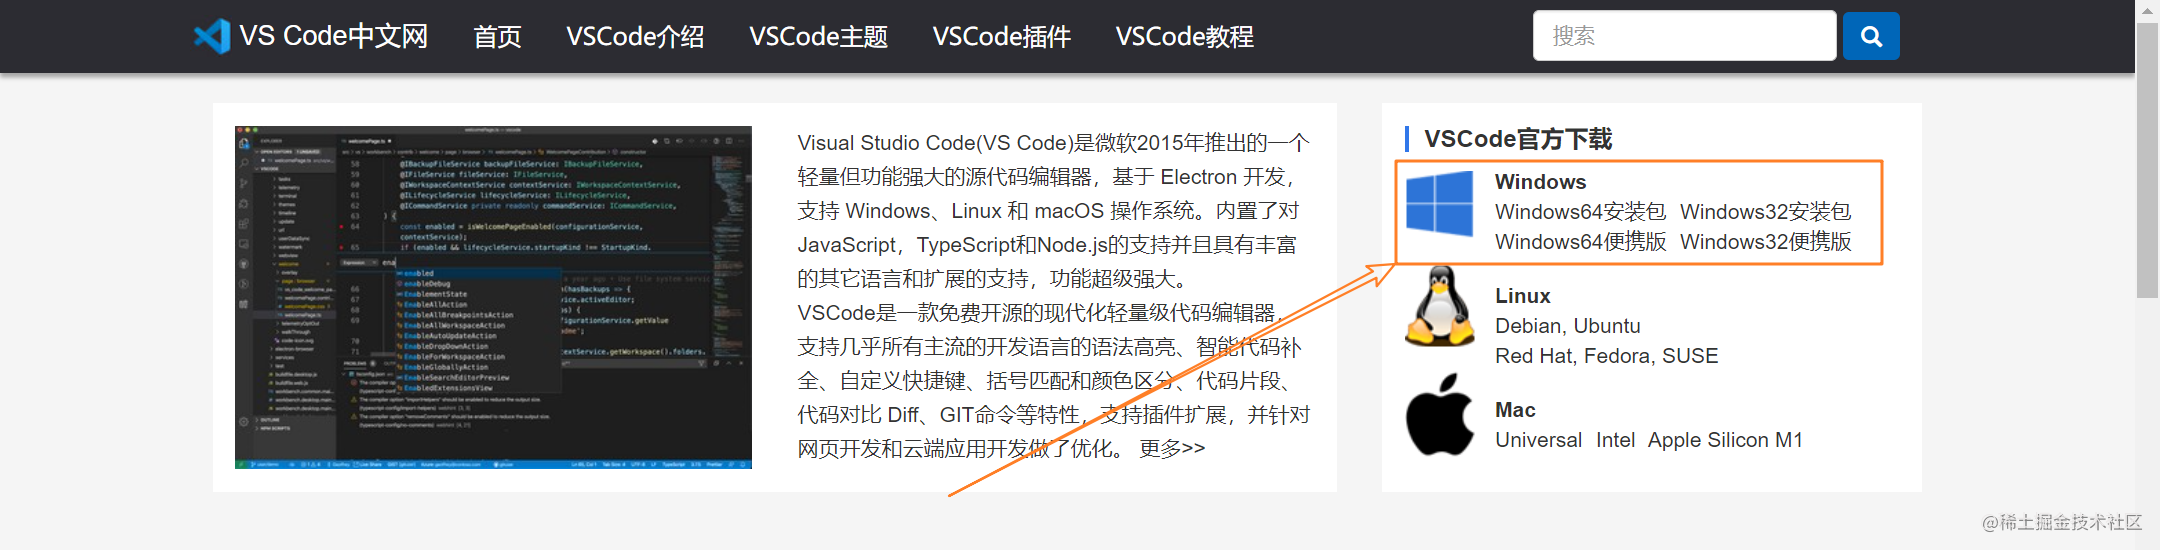 VSCode中文网.png